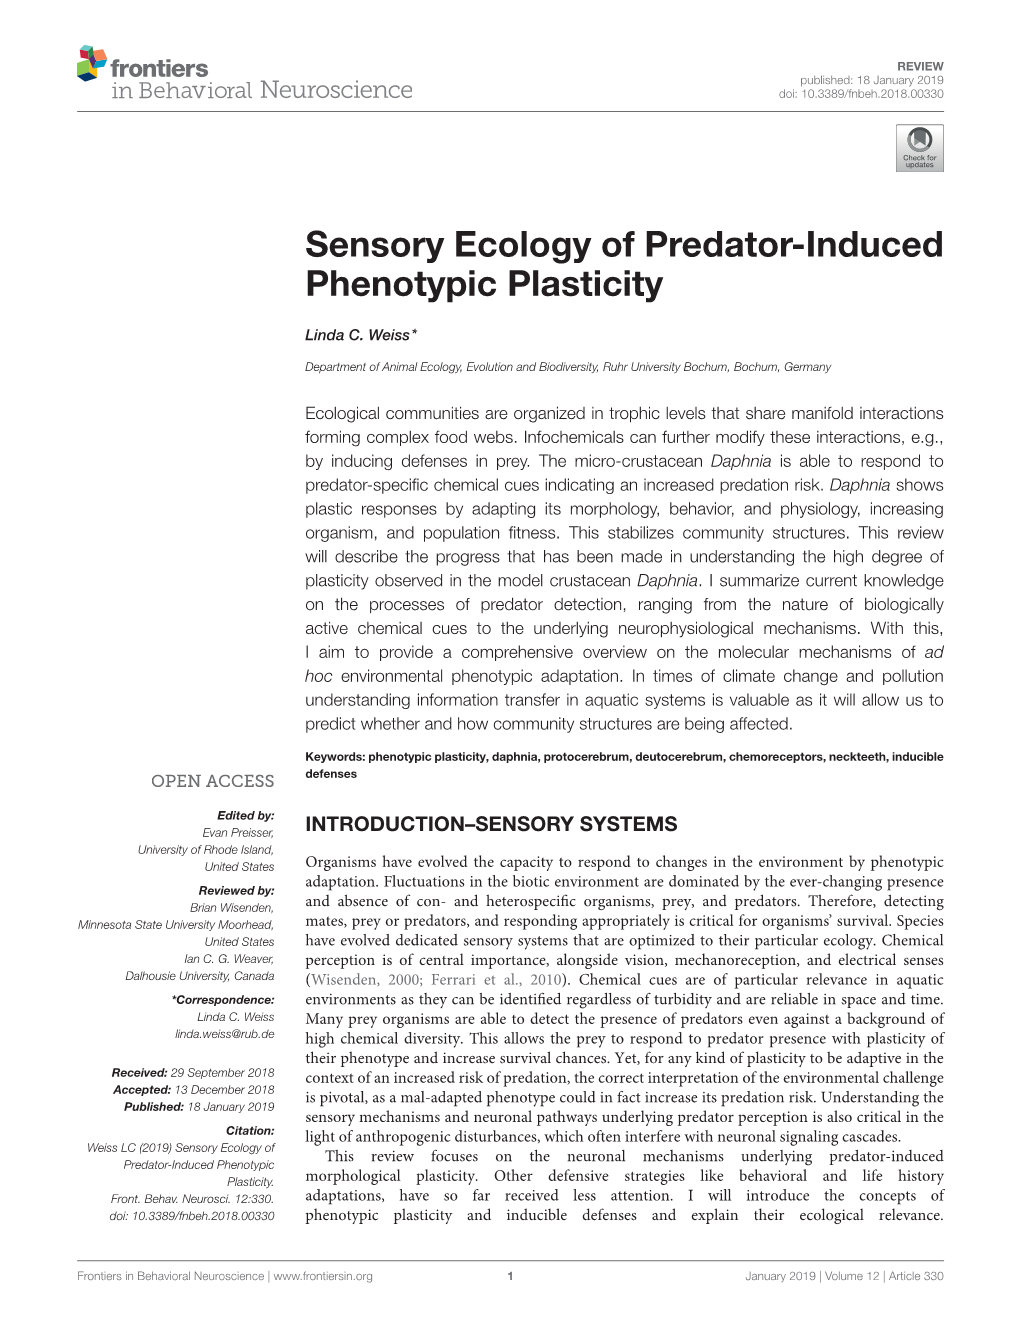 Sensory Ecology of Predator-Induced Phenotypic Plasticity